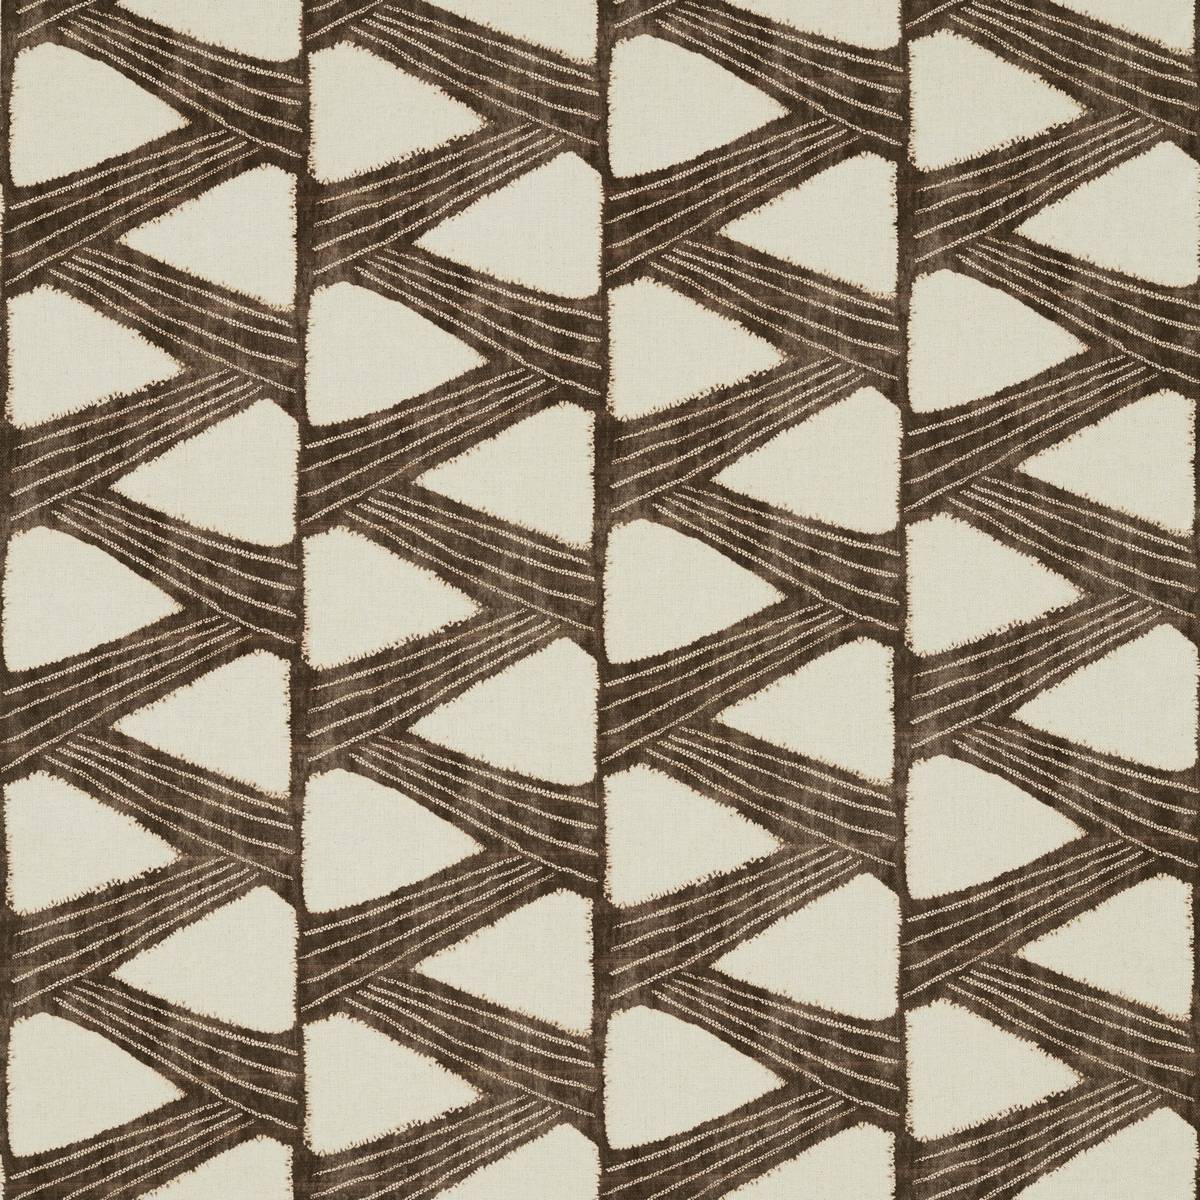 Kanoko Charcoal Fabric by Zoffany